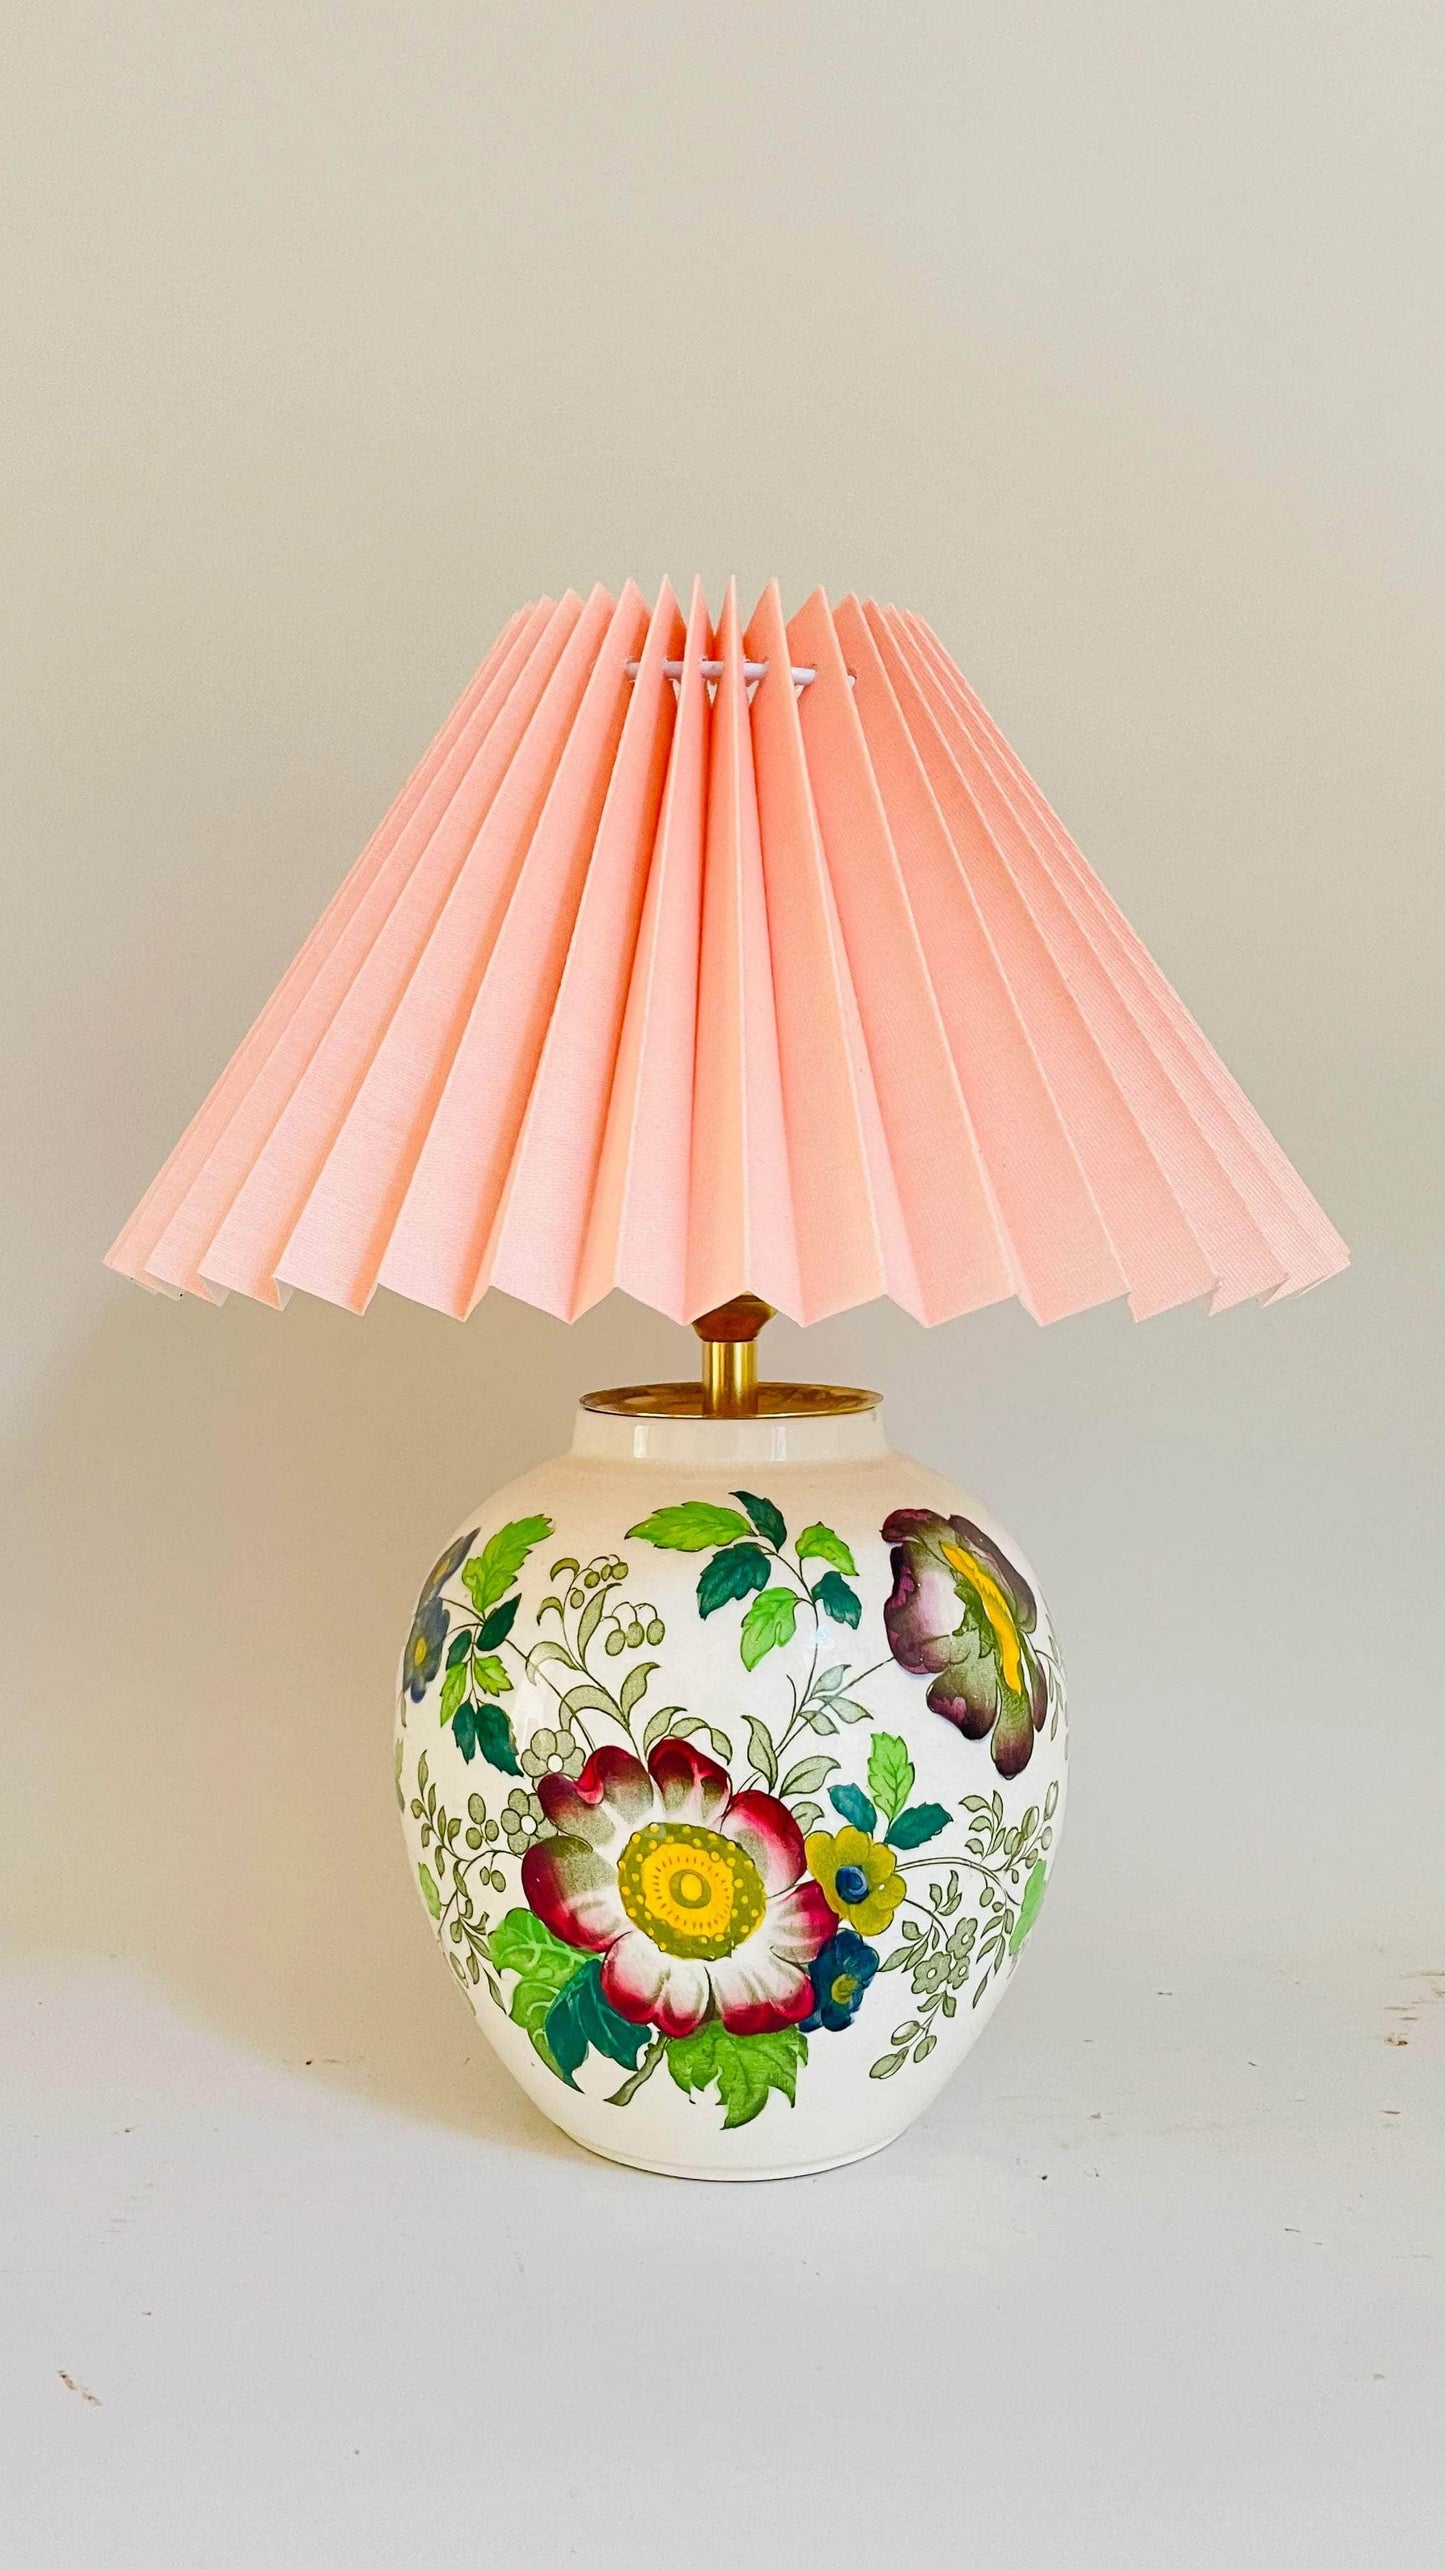 Antique Mason's Lamp - pre order for mid June